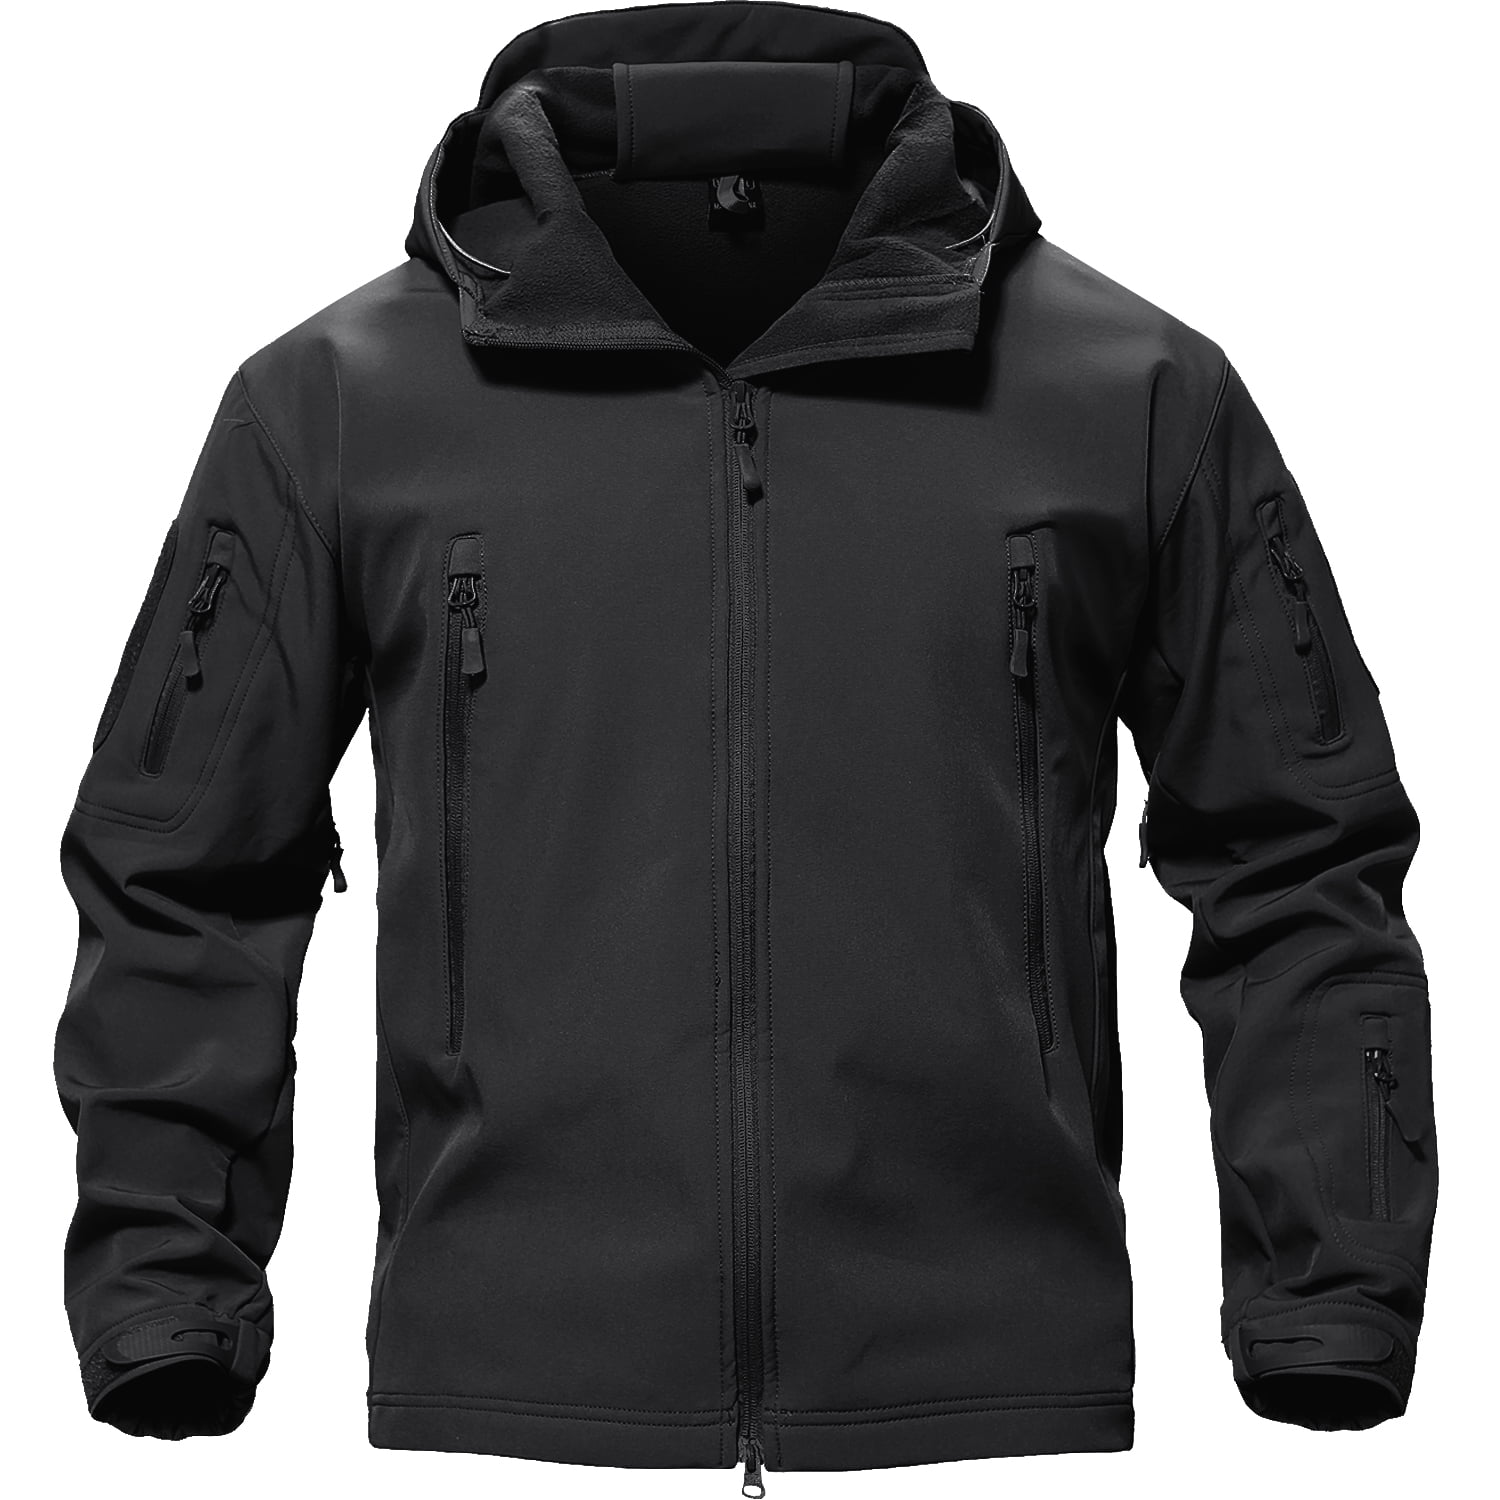 TACVASEN Men's Tactical Jackets Water Resistant Softshell Jacket Fleece Lined Hiking Training Coat 